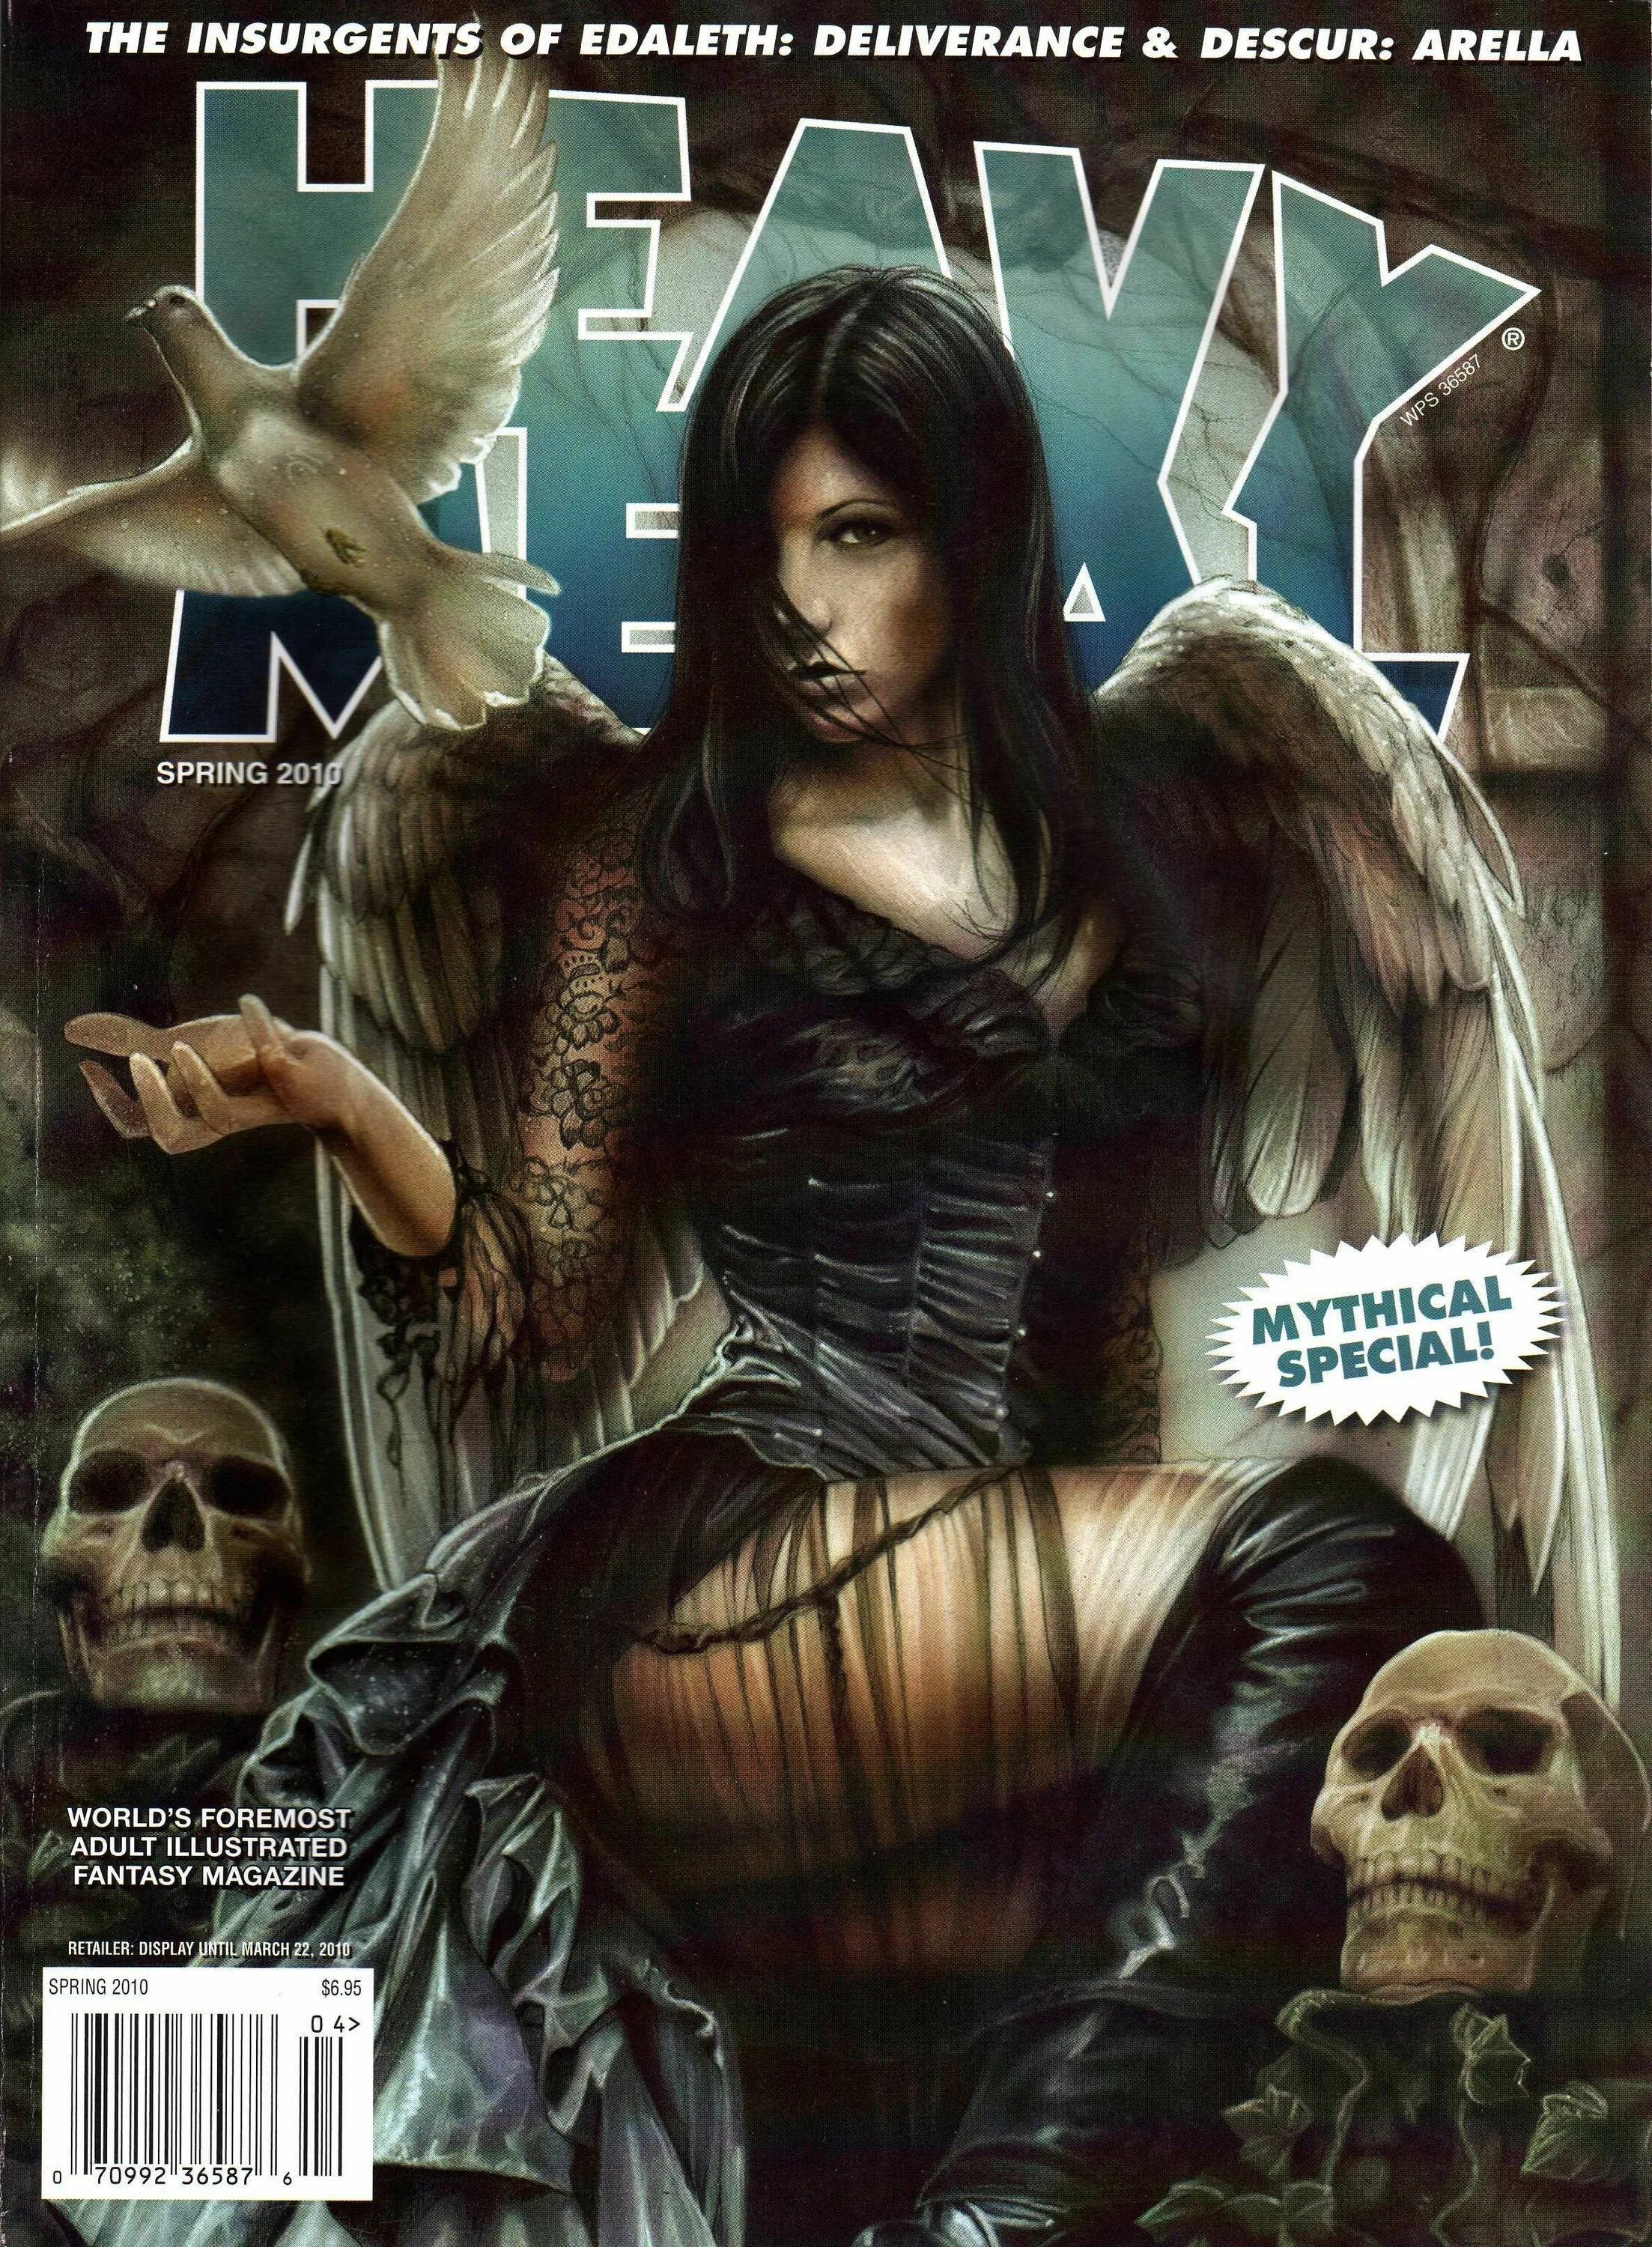 Heavy Metal обложки журнала. Хеви метал журнал. Хеви метал комикс. Комиксы журнала Heavy Metal. Metal lover перевод